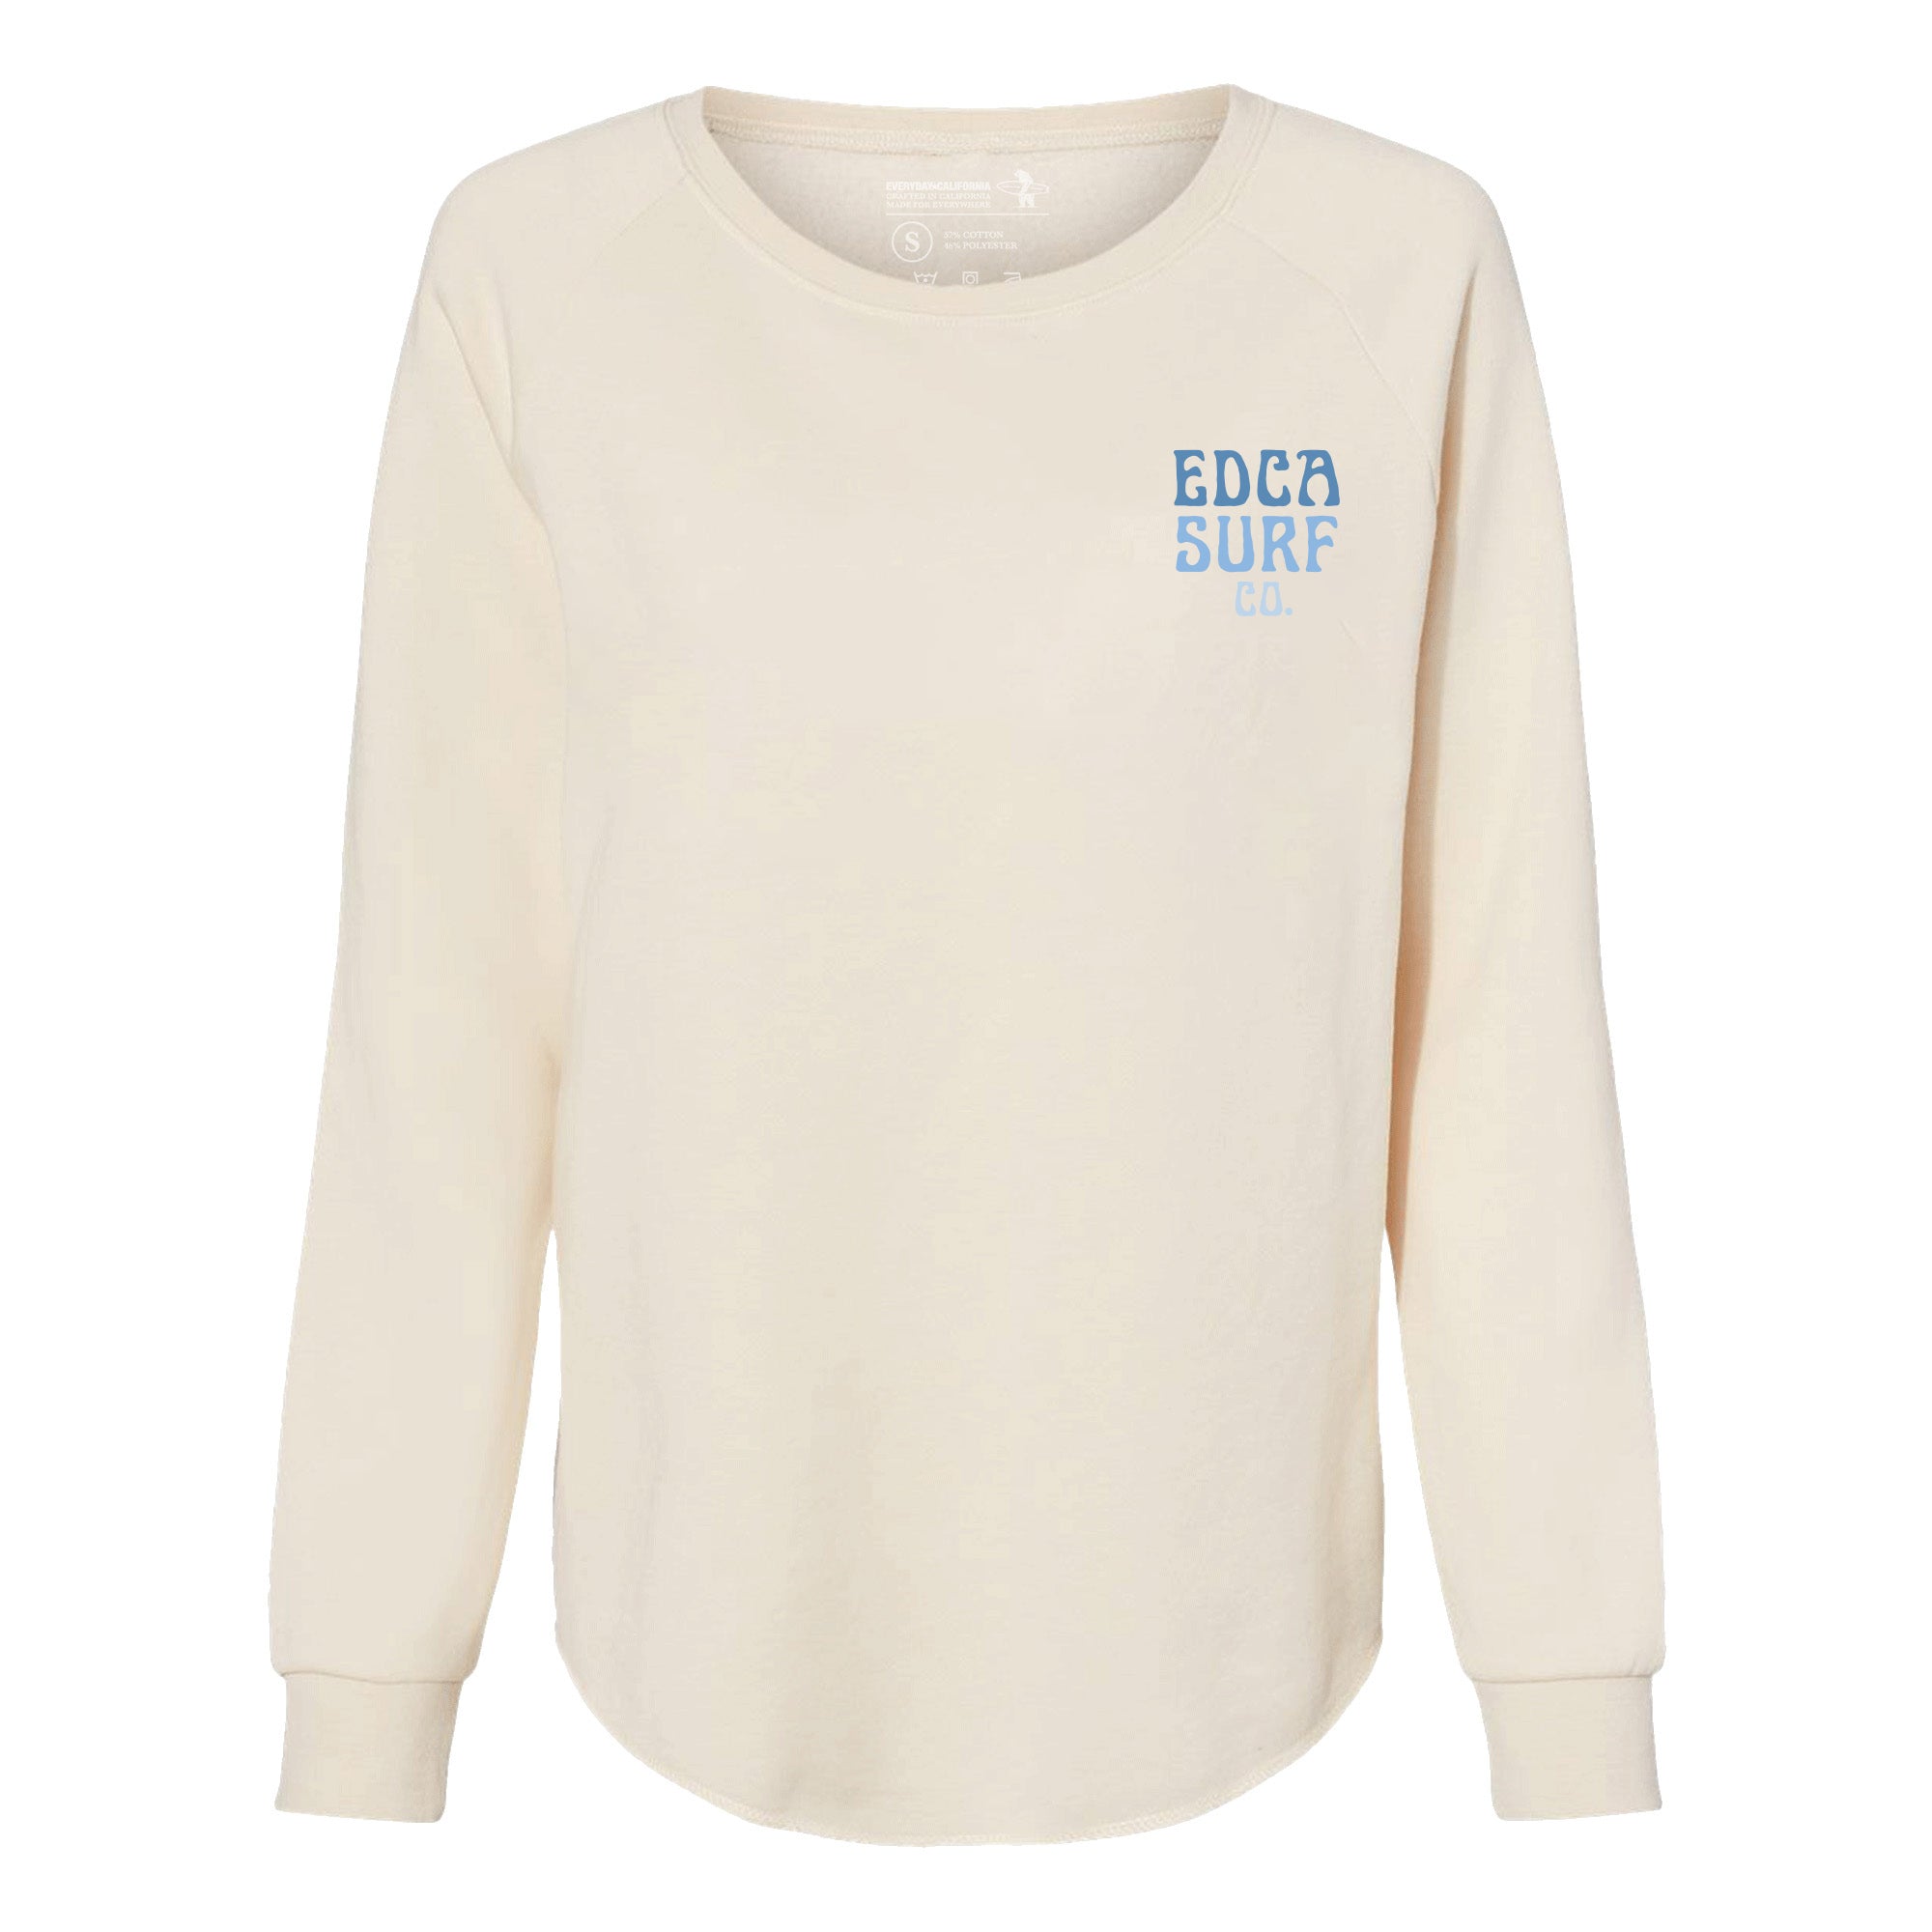 Womens long sleeve shirt with "EDCA SURF" printed on top left corner